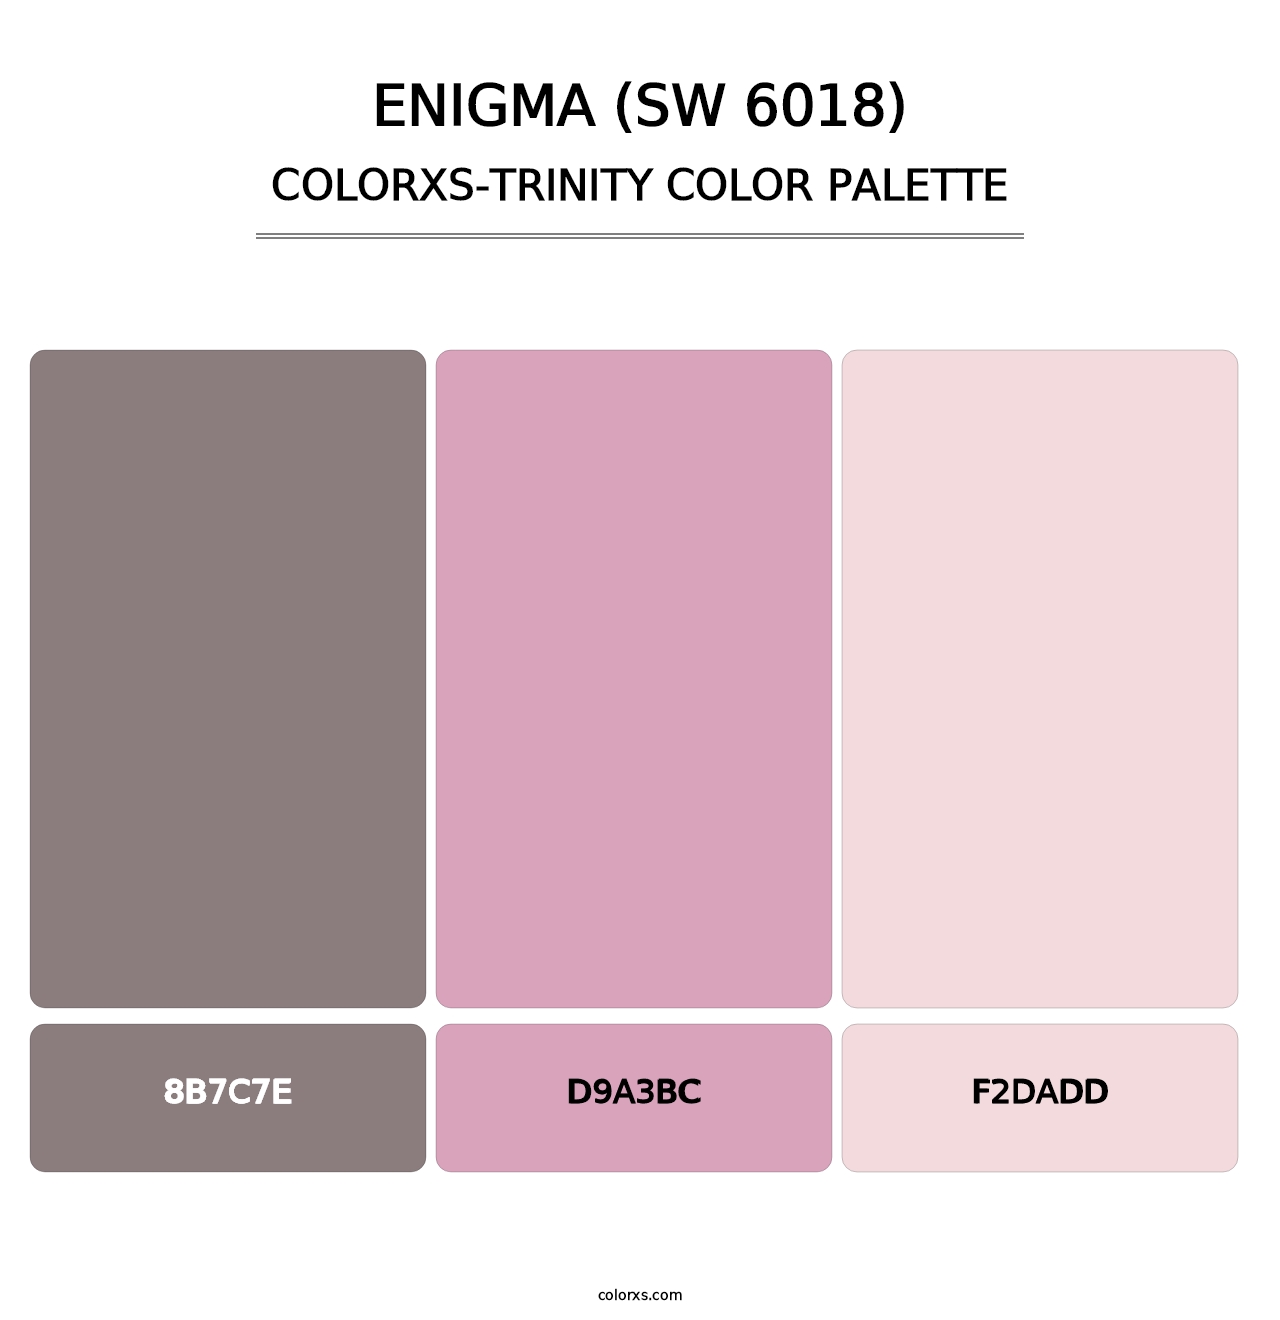 Enigma (SW 6018) - Colorxs Trinity Palette